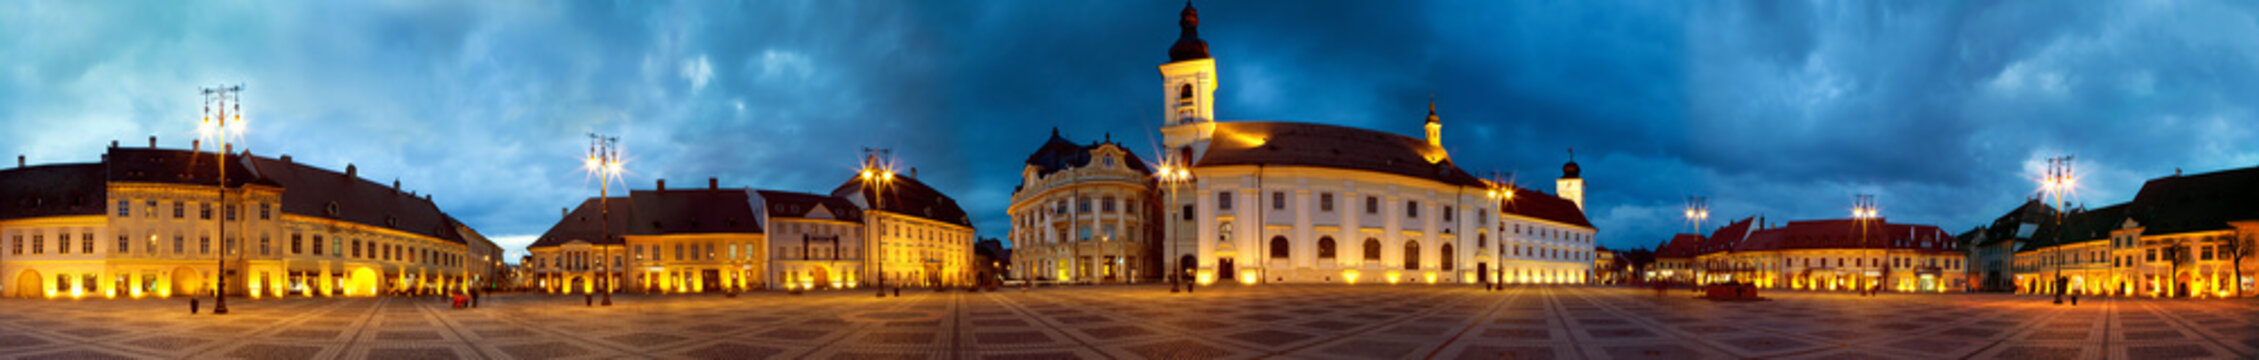 Sibiu by night